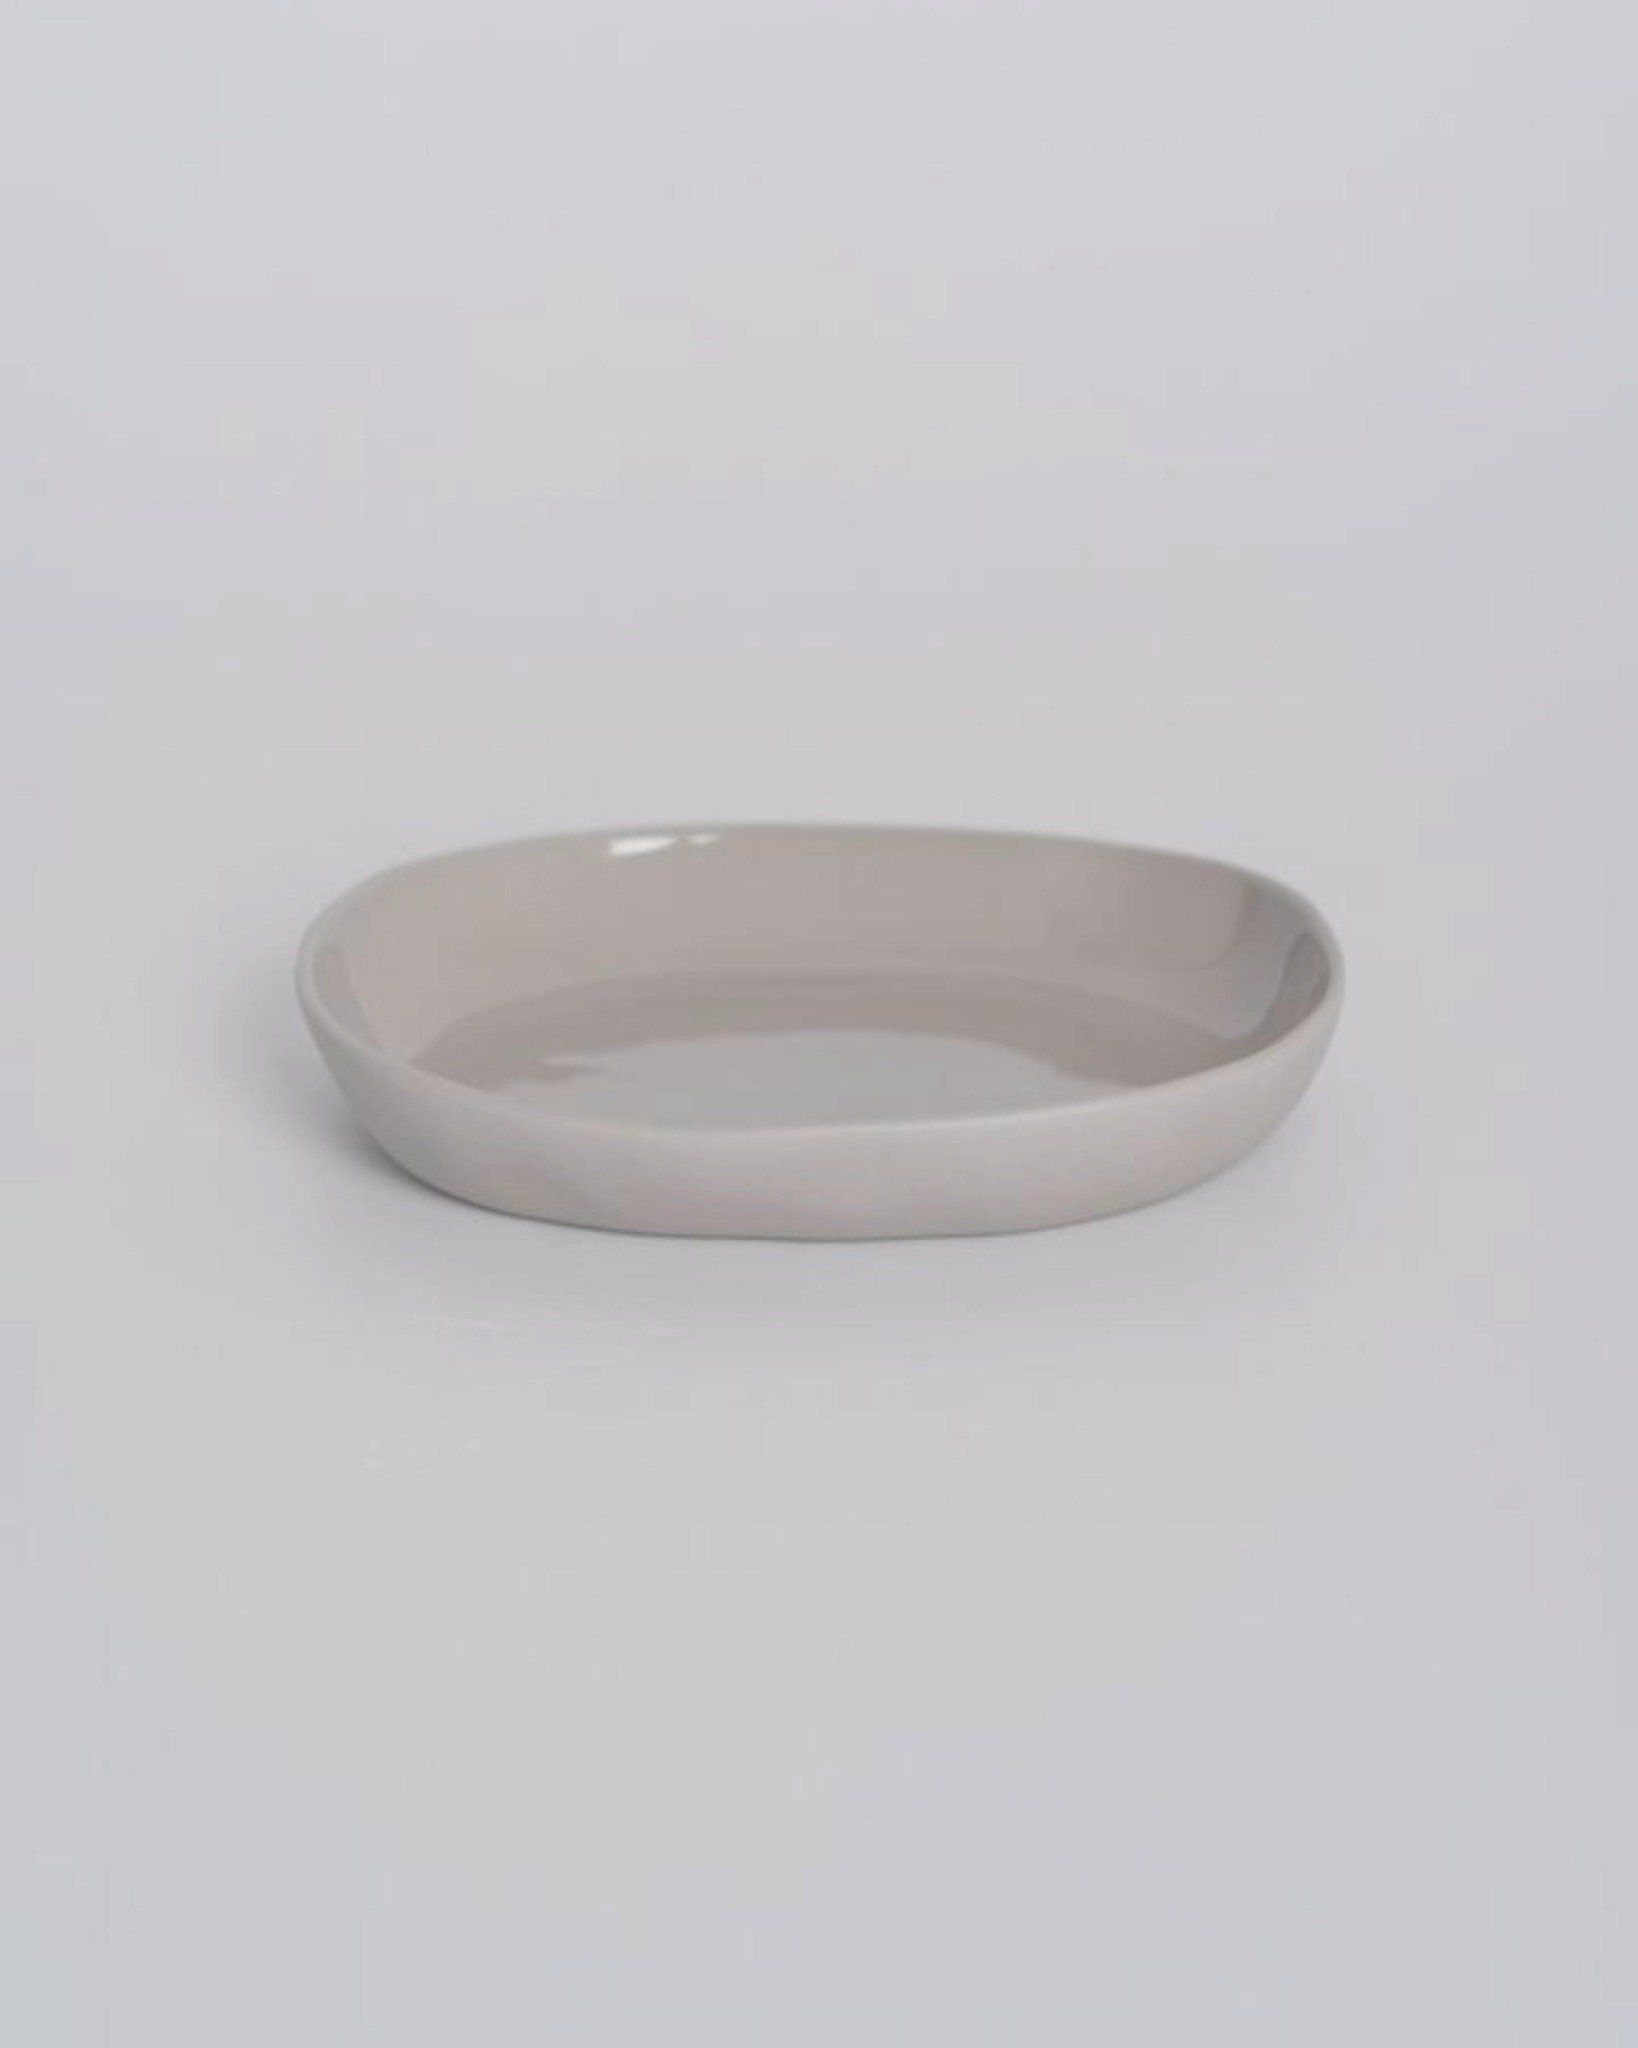  Oval Ceramic Plate 